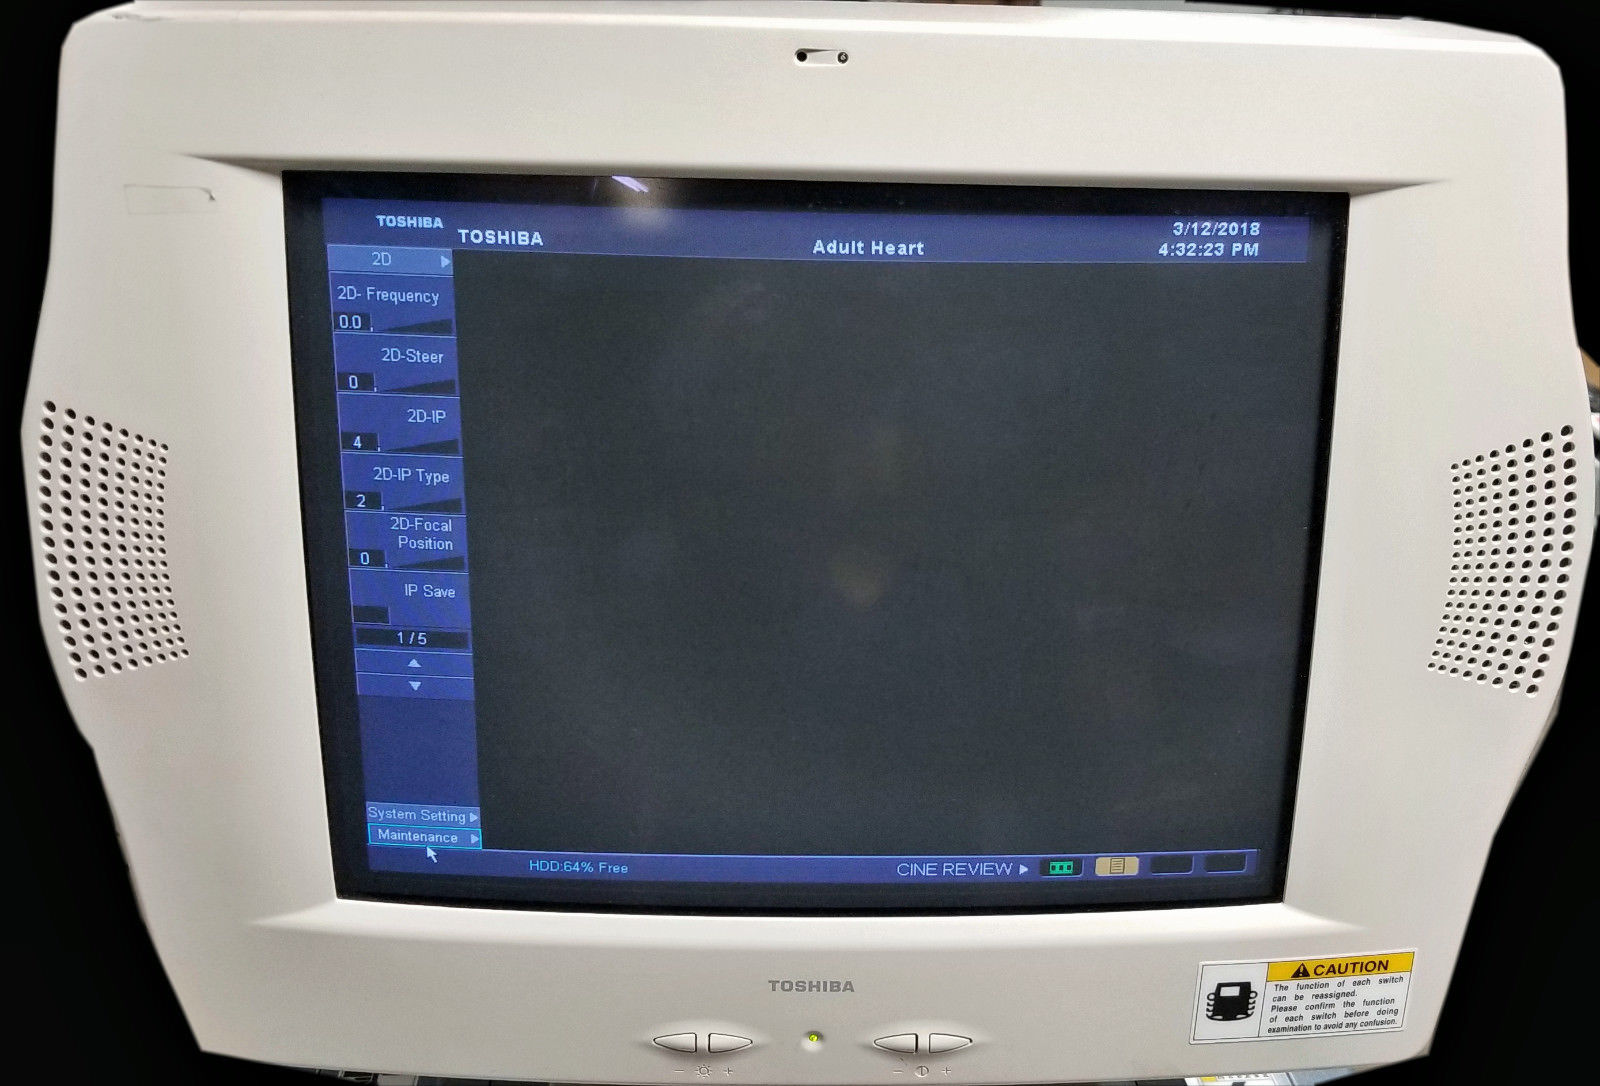 Toshiba Aplio SSA-770A CRT Ultrasound System DIAGNOSTIC ULTRASOUND MACHINES FOR SALE